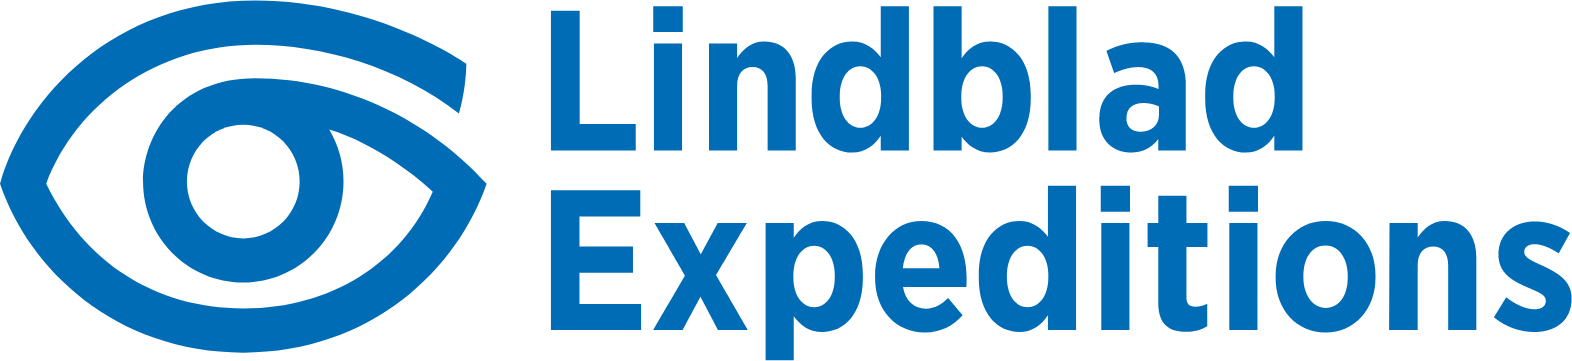 Lindblad Expeditions logo large (transparent PNG)